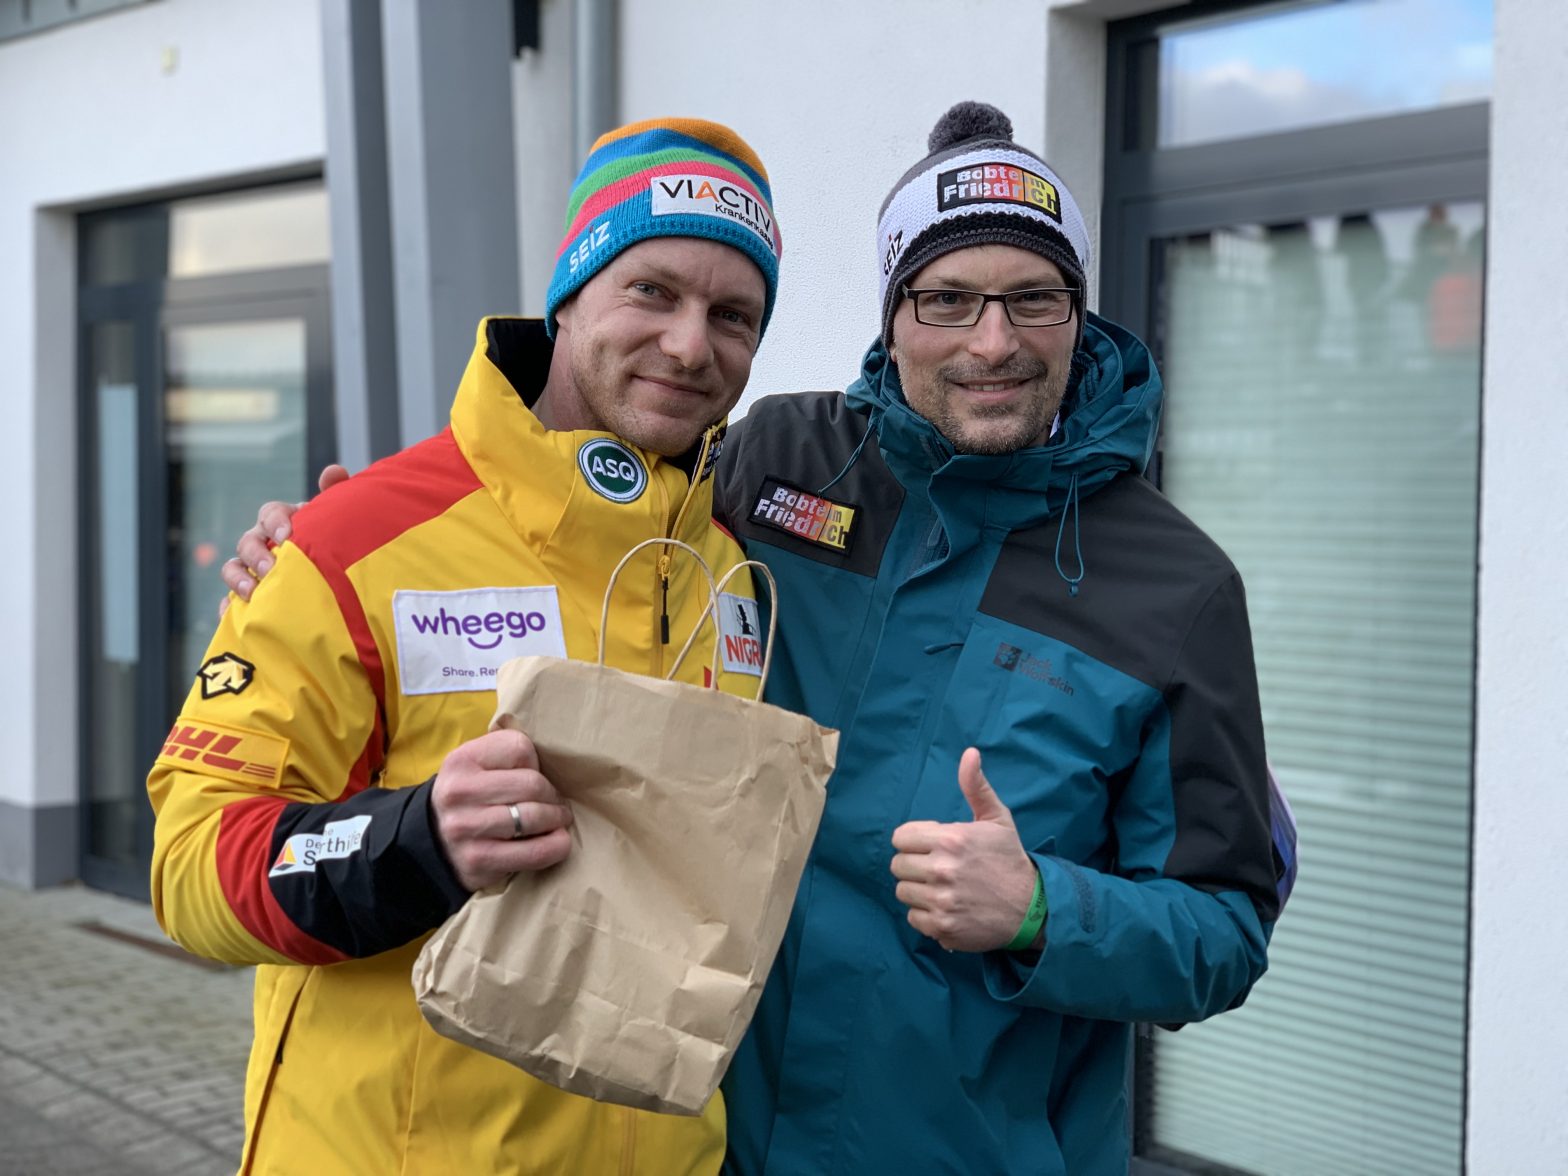 Successful weekend for German bobsleigh rider | IBSF World Cup Winterberg